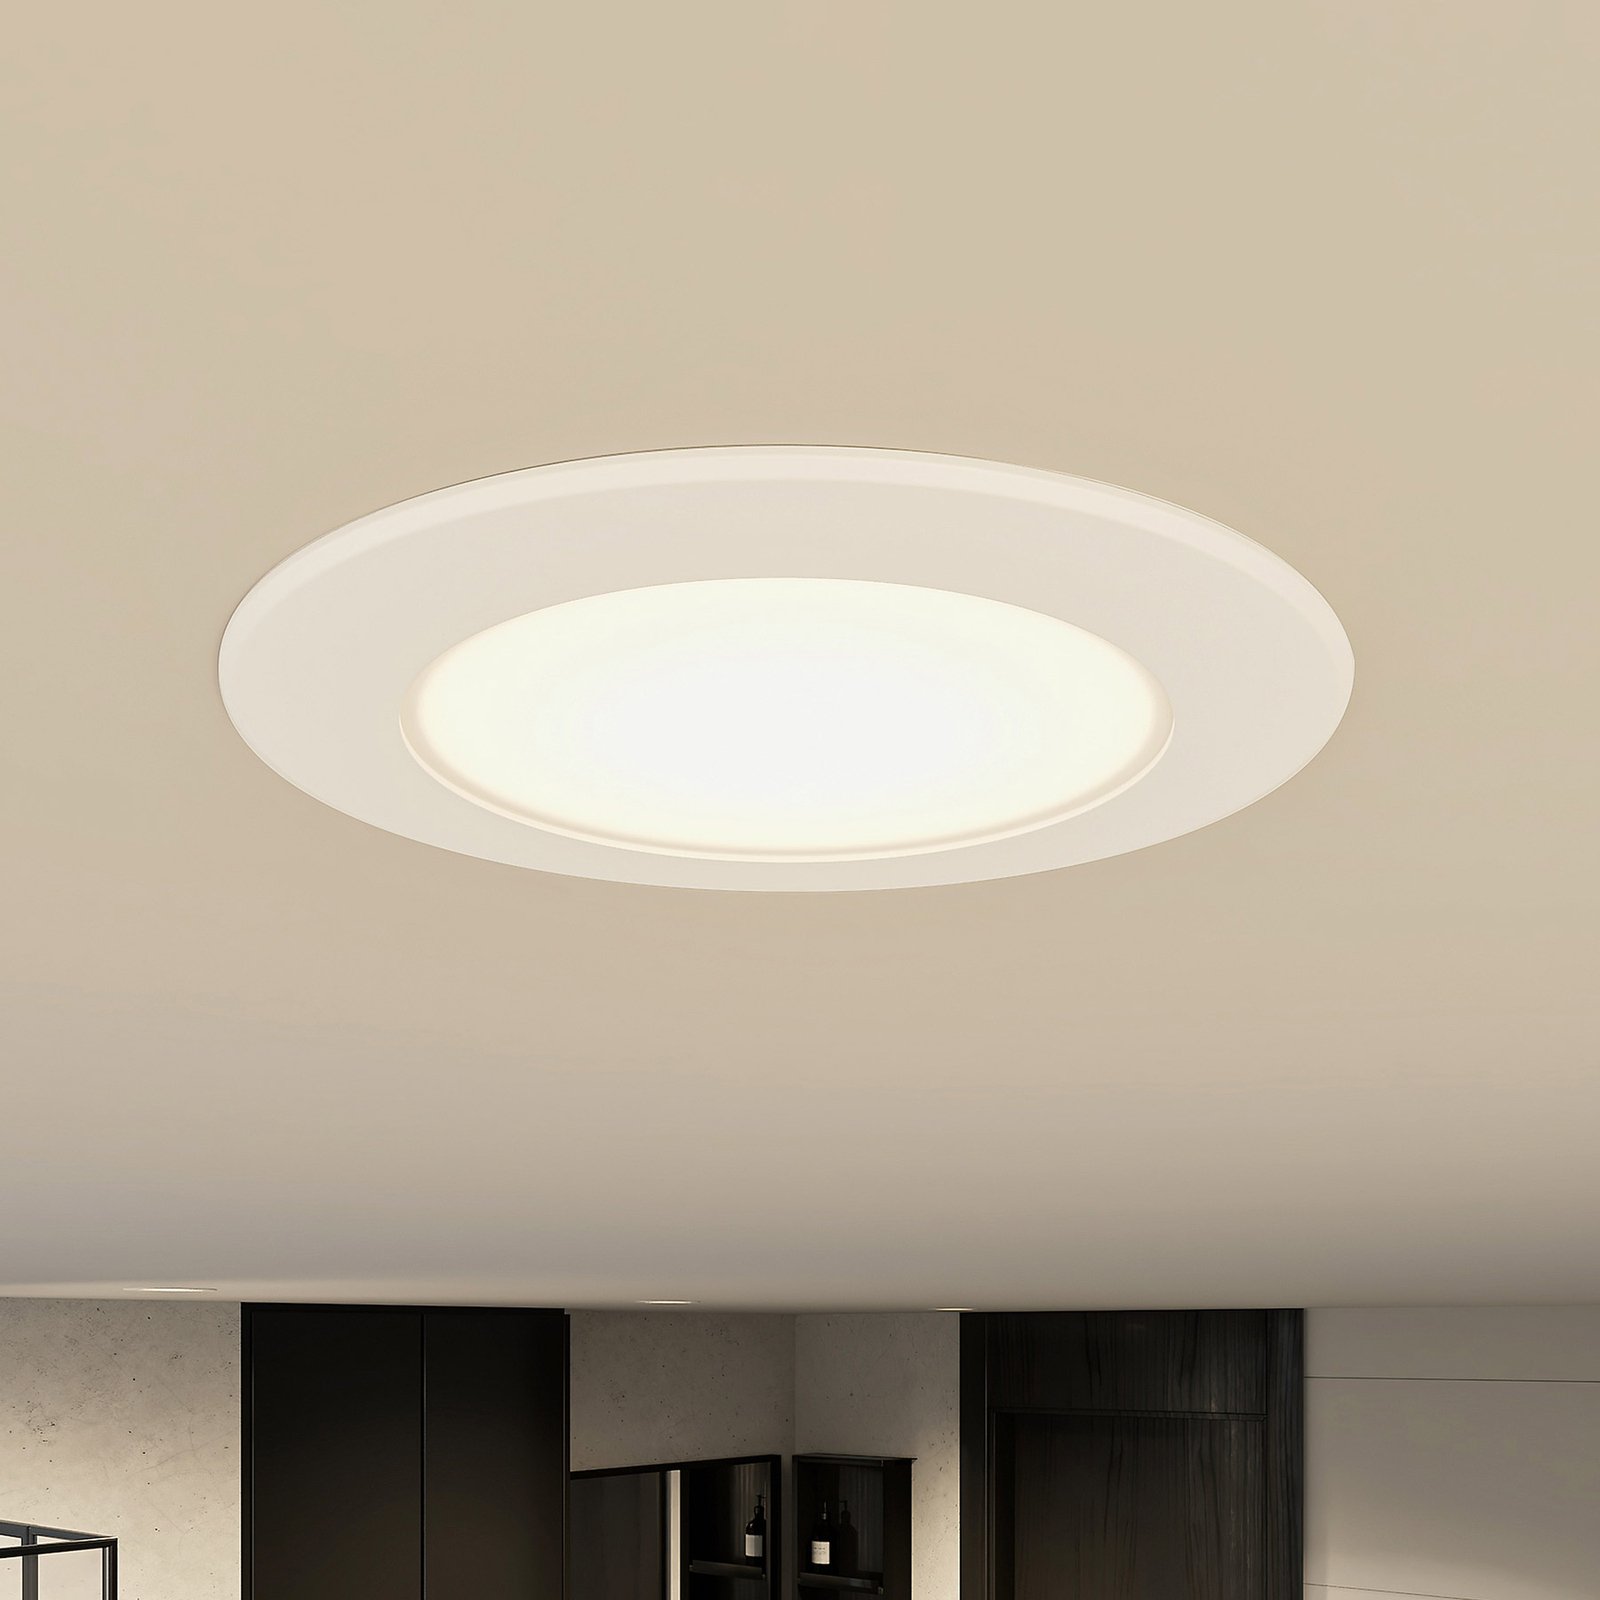 Prios Rida LED inbouwspot, CCT, 11,5 cm, 9 W